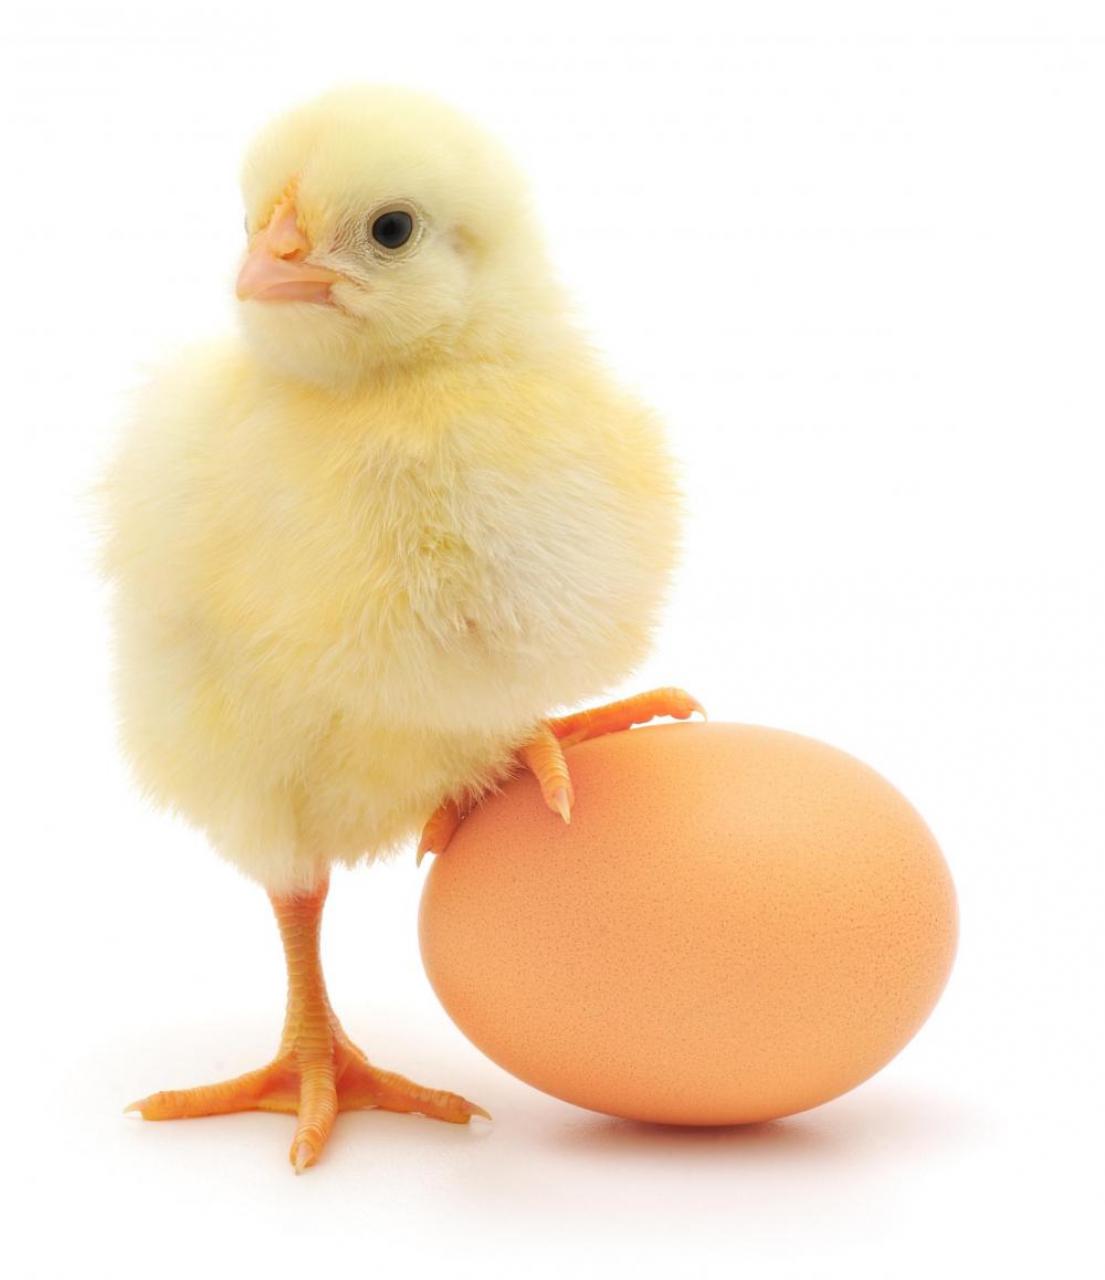 baby-chick-and-an-egg_4473966_lrg.jpg